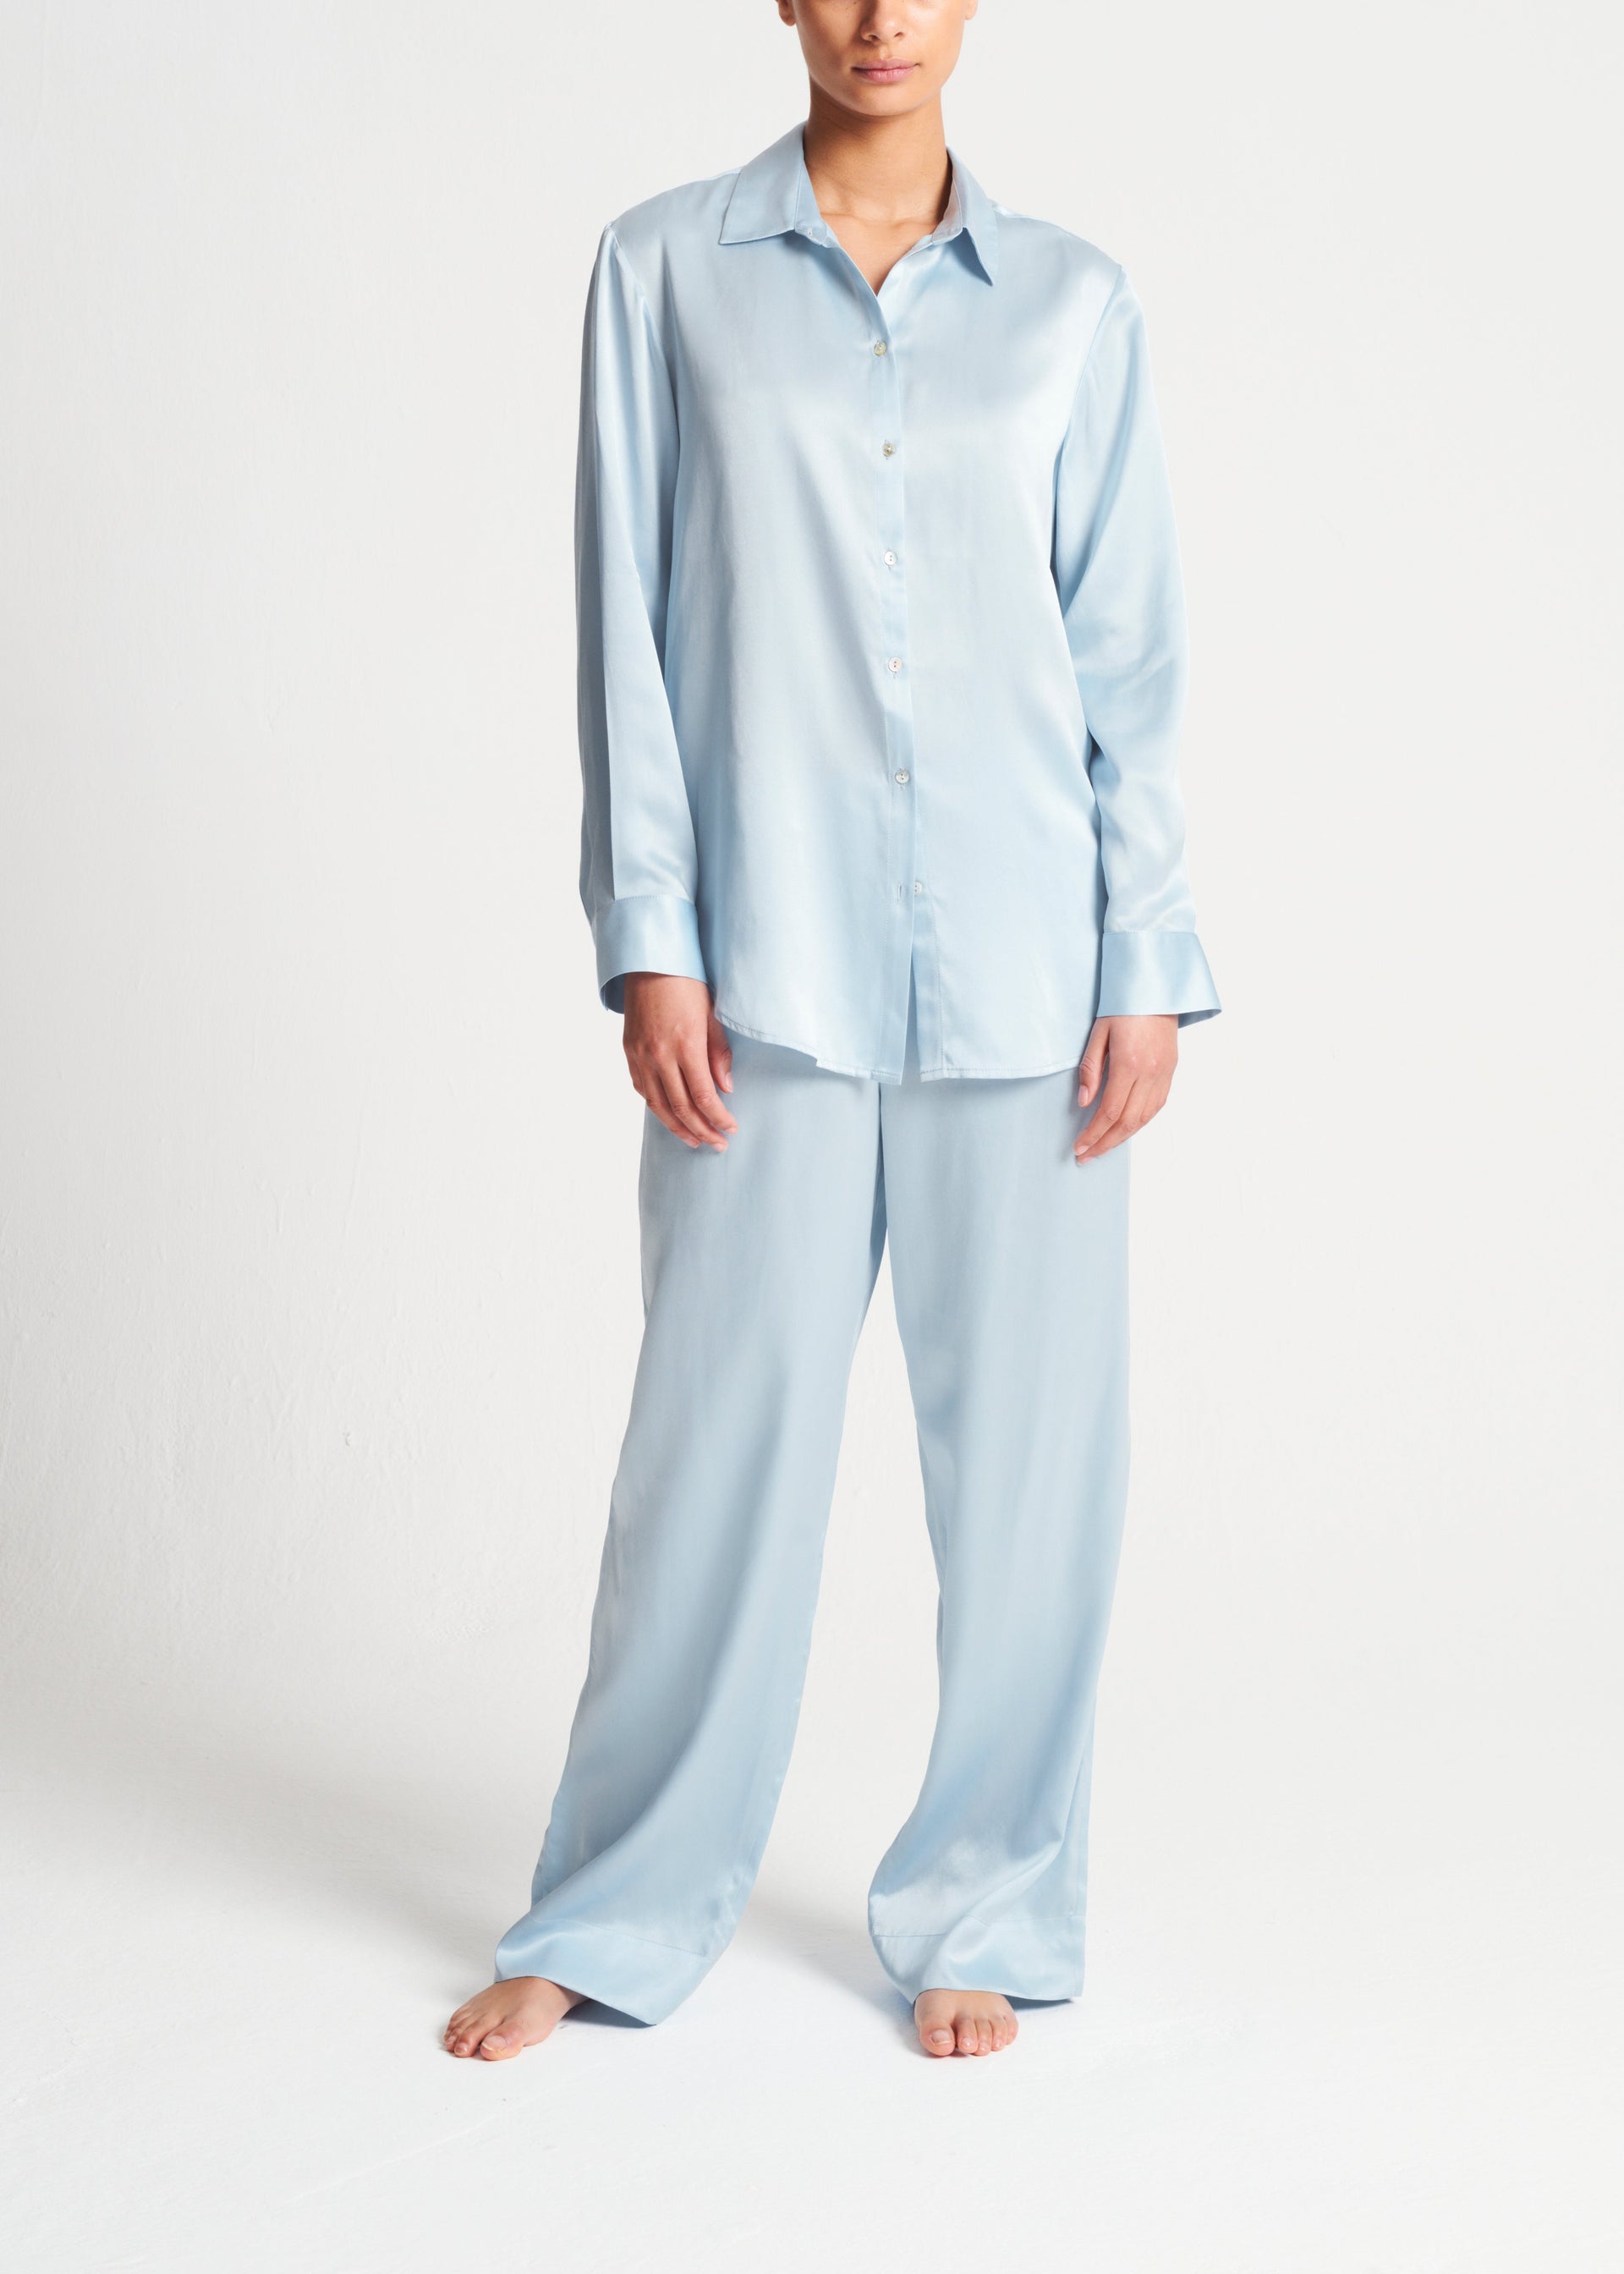 London Pyjama Bottom Sky Blue Silk Charmeuse